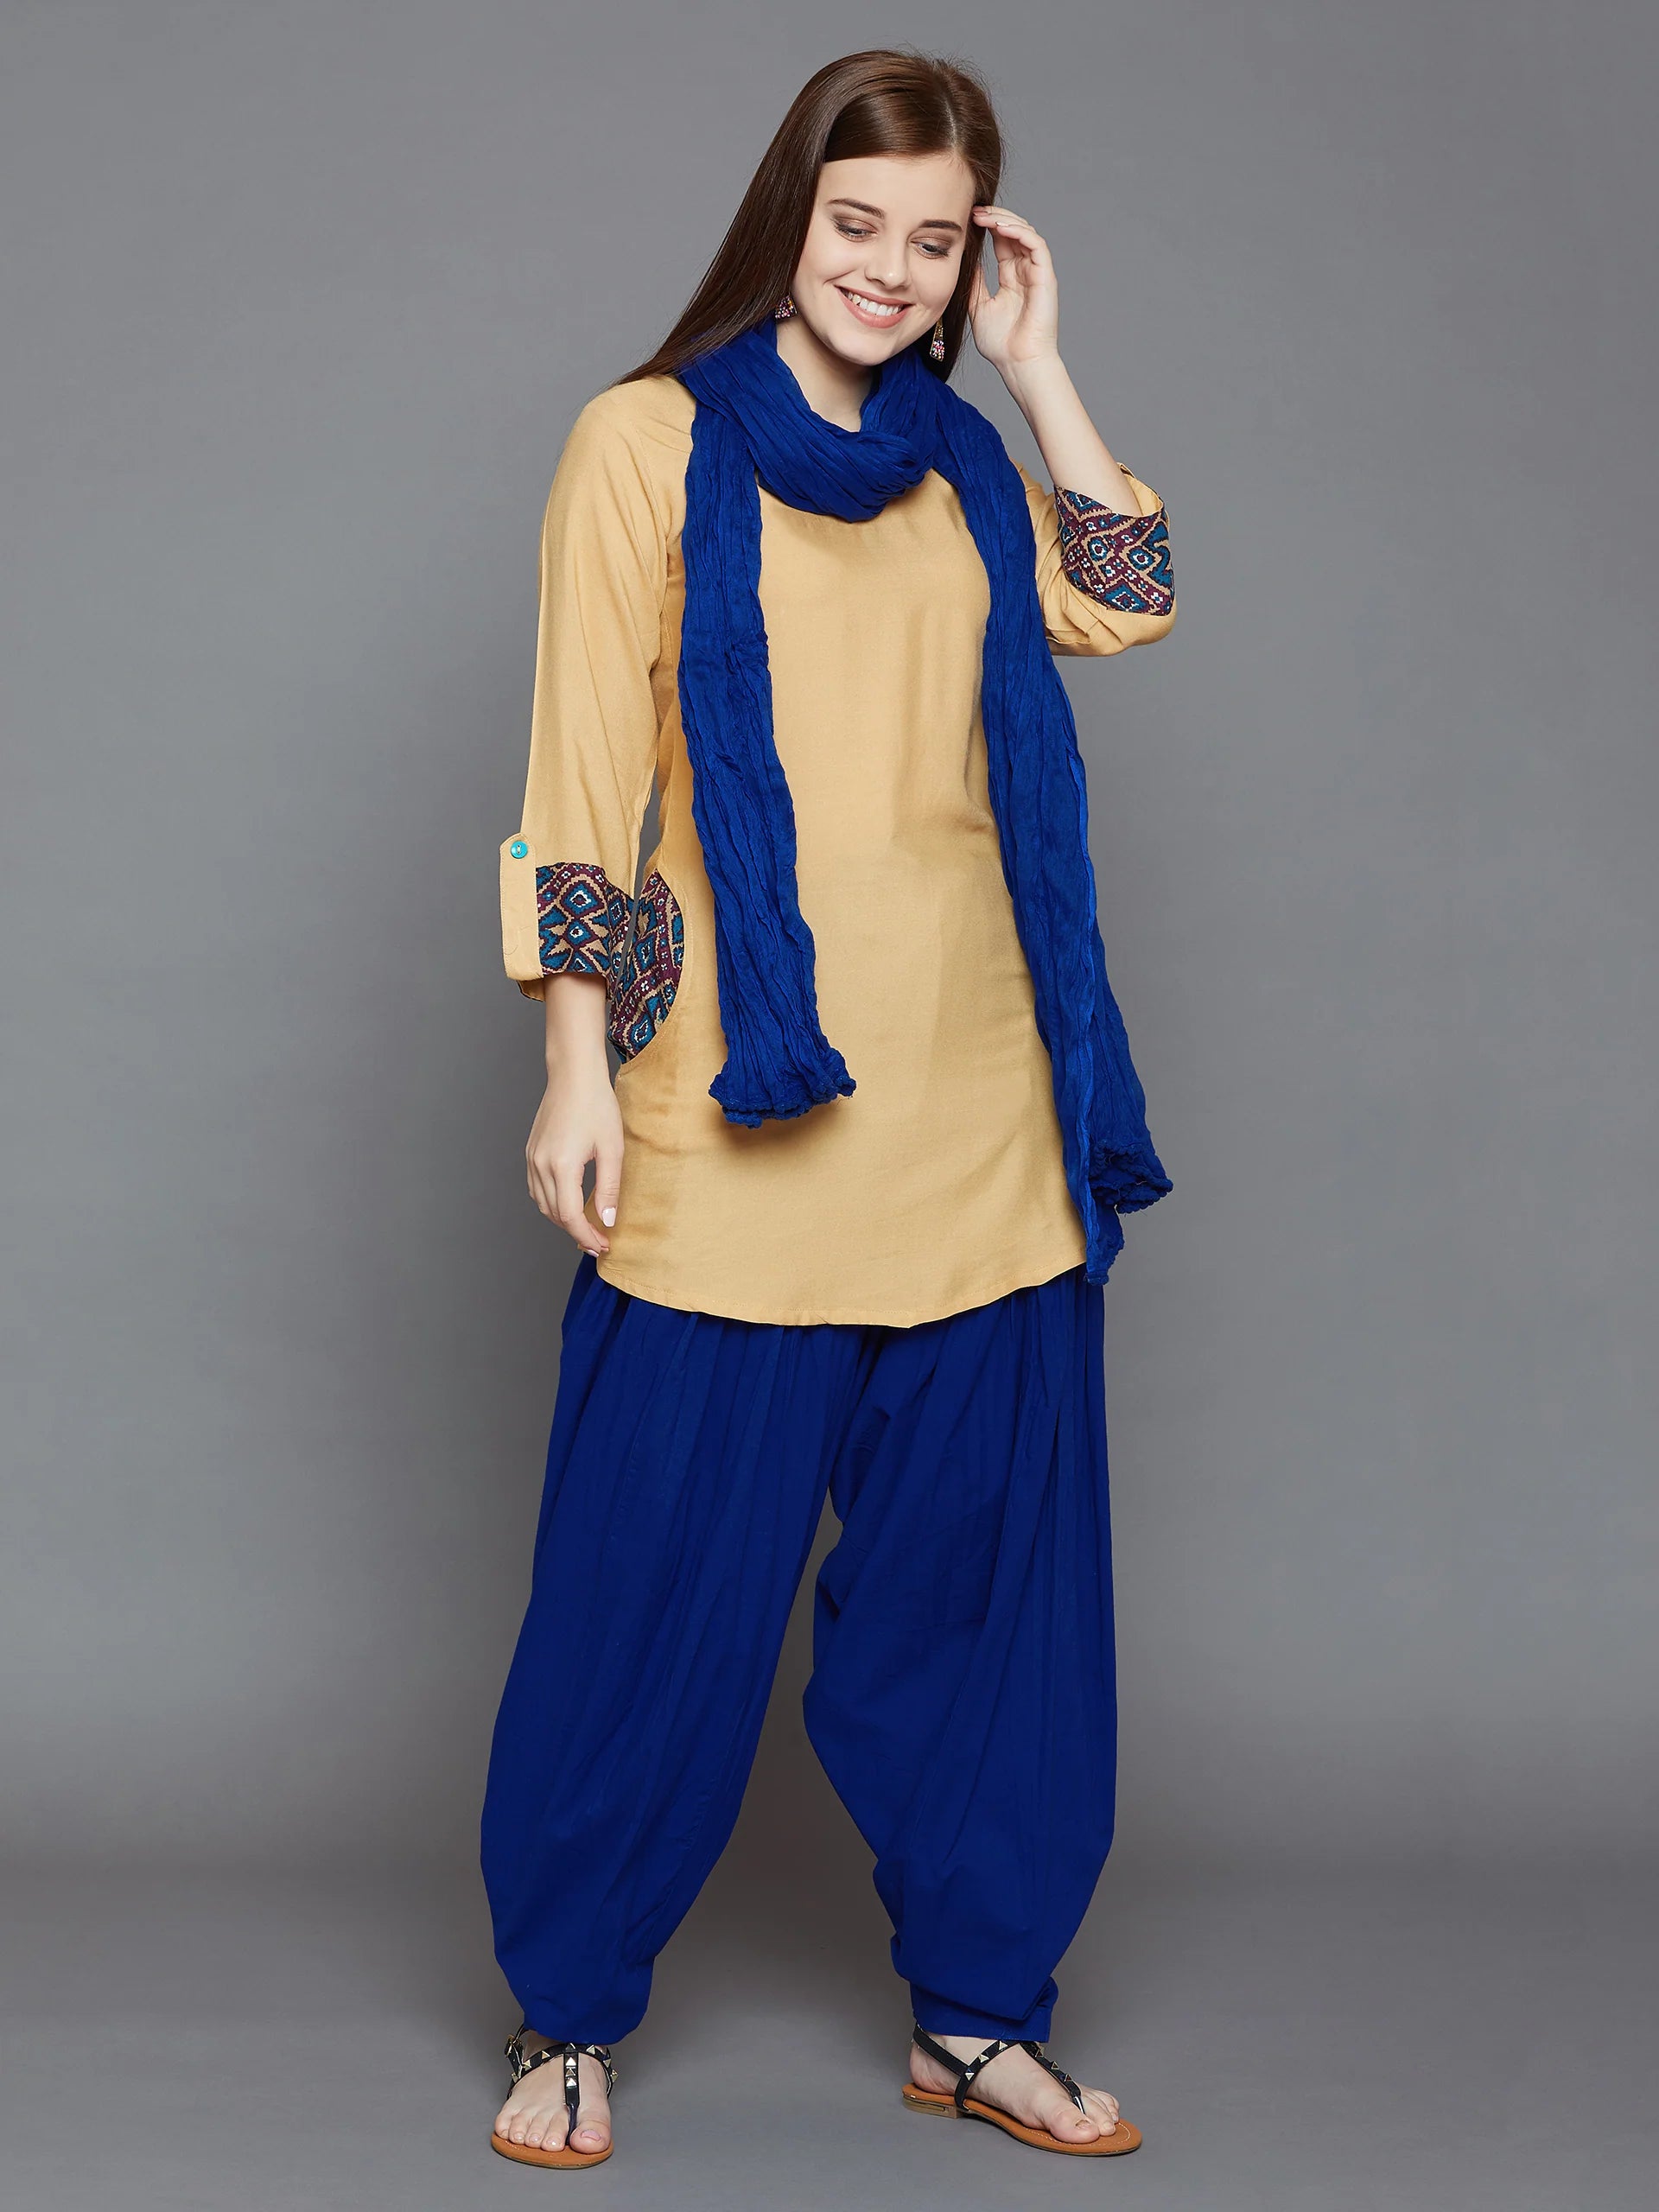 New Latest casual wear salwar kurti designs 2020 | Patiala kurti design |  Salwar suits 2020 ideas - YouTube